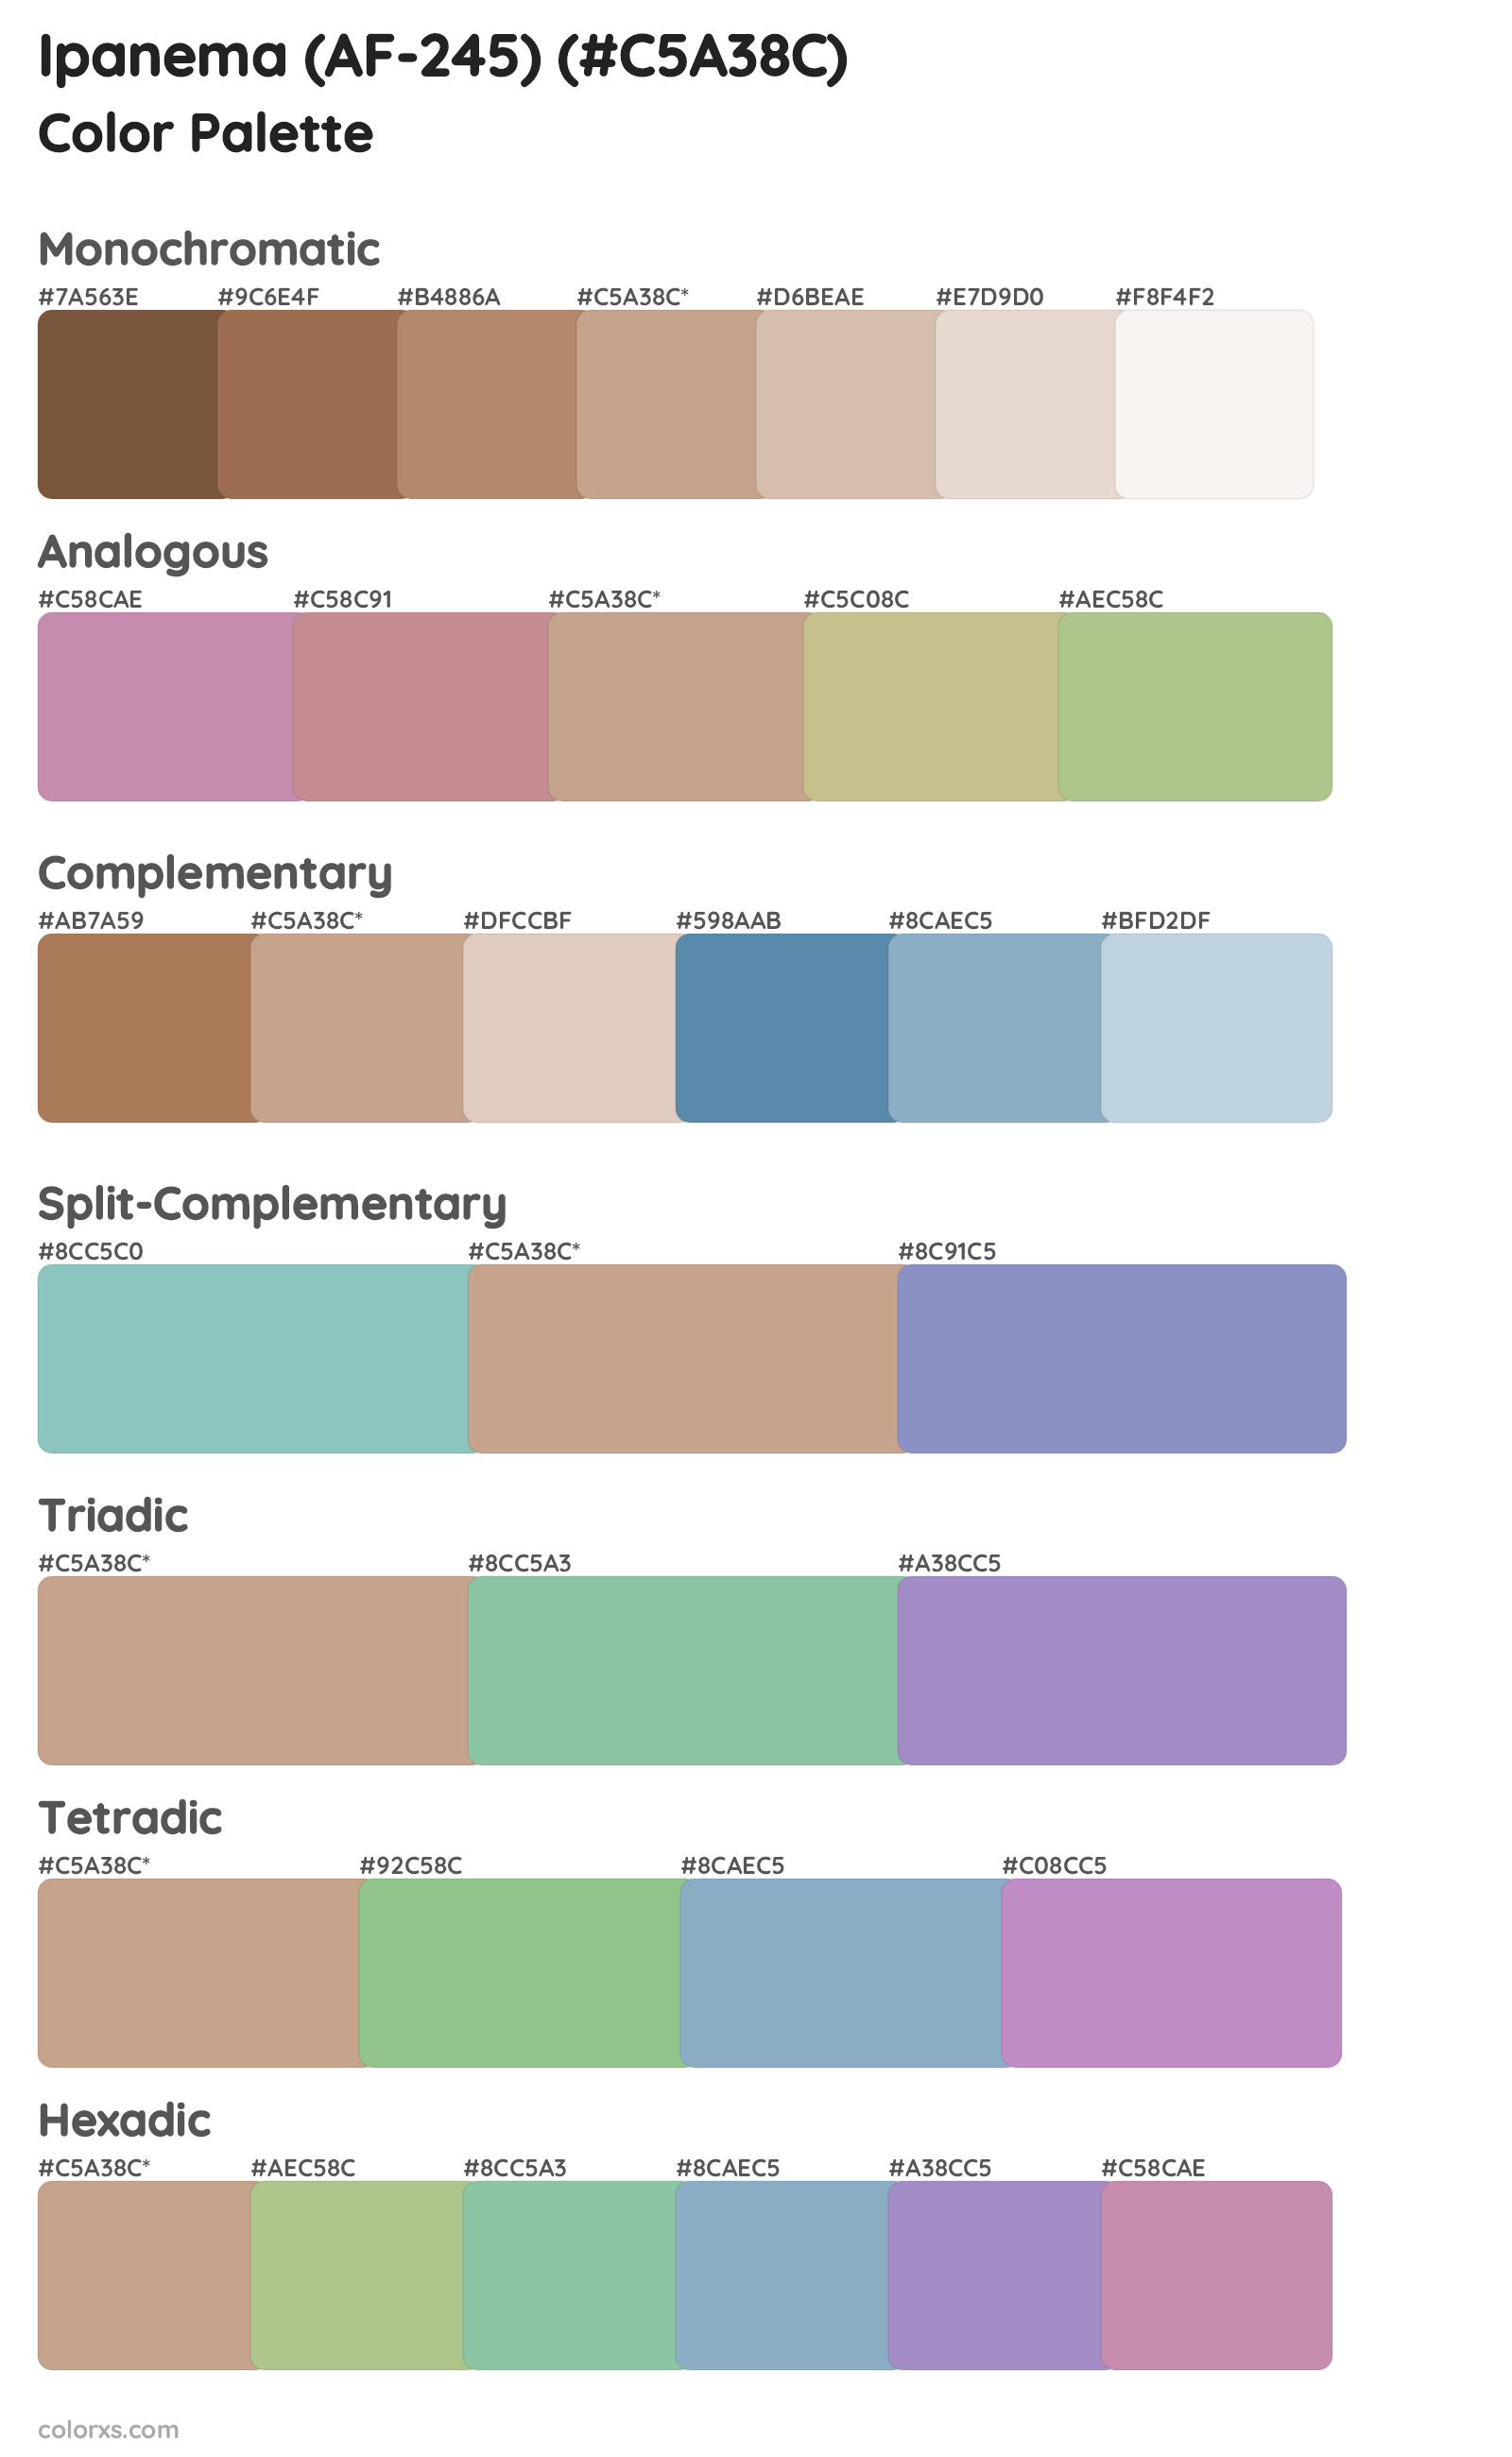 Ipanema (AF-245) Color Scheme Palettes